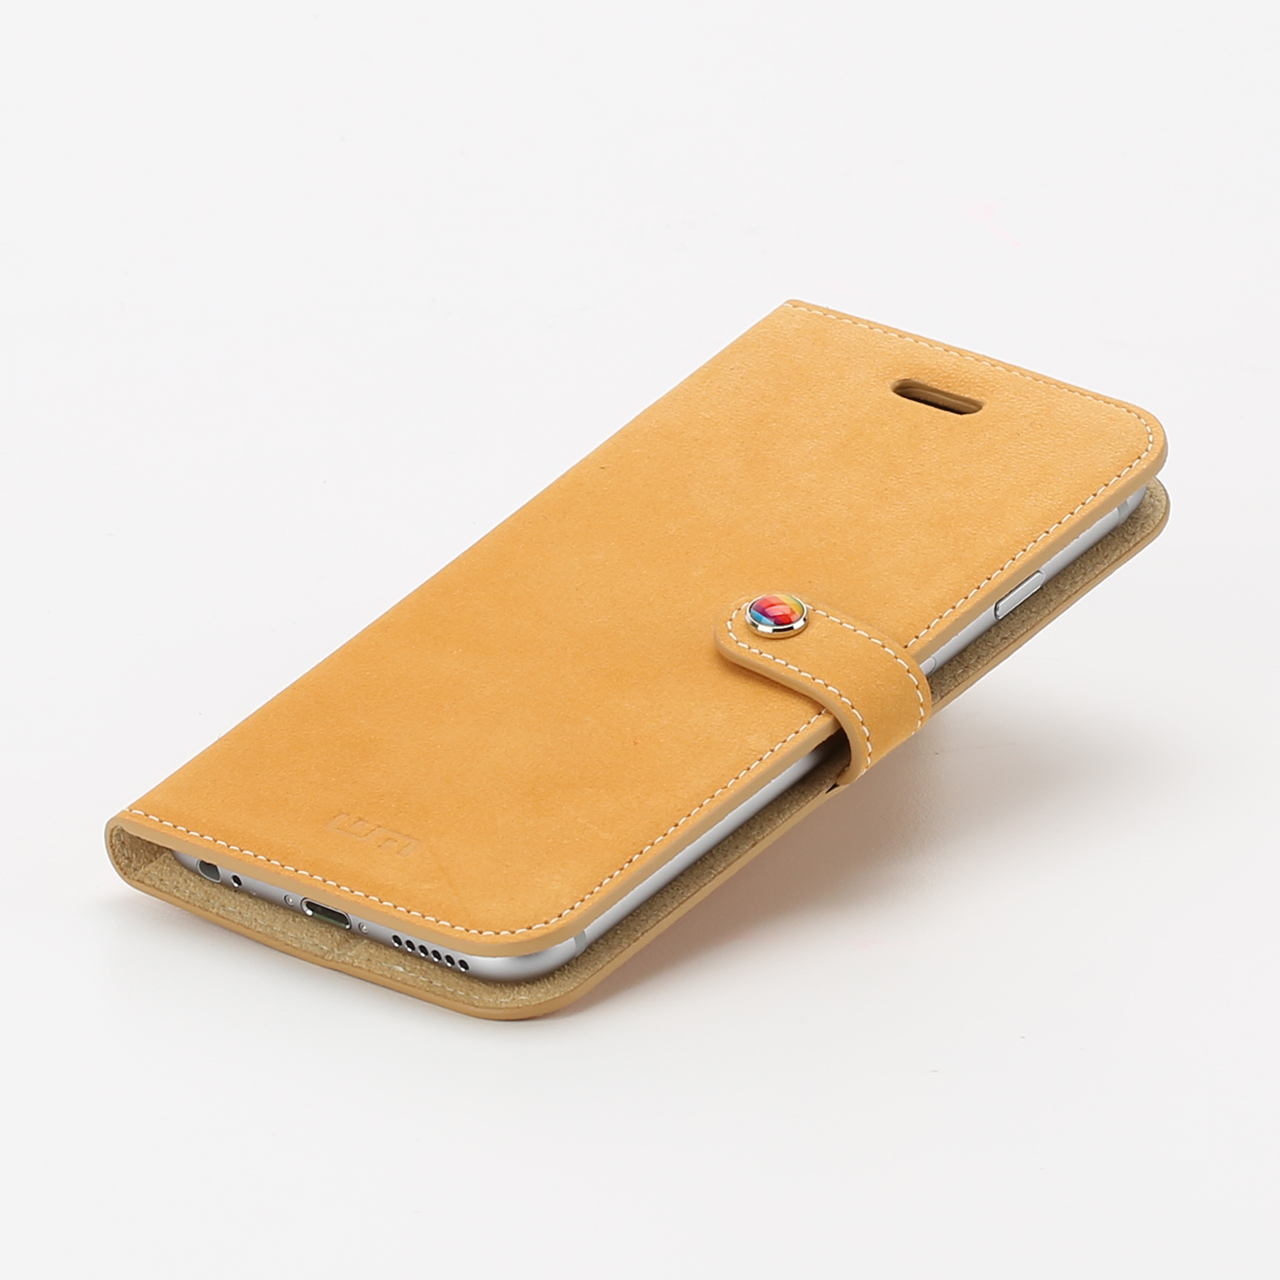 lims-premium-leather-slim-fit-edition-iphone-6-09.jpg